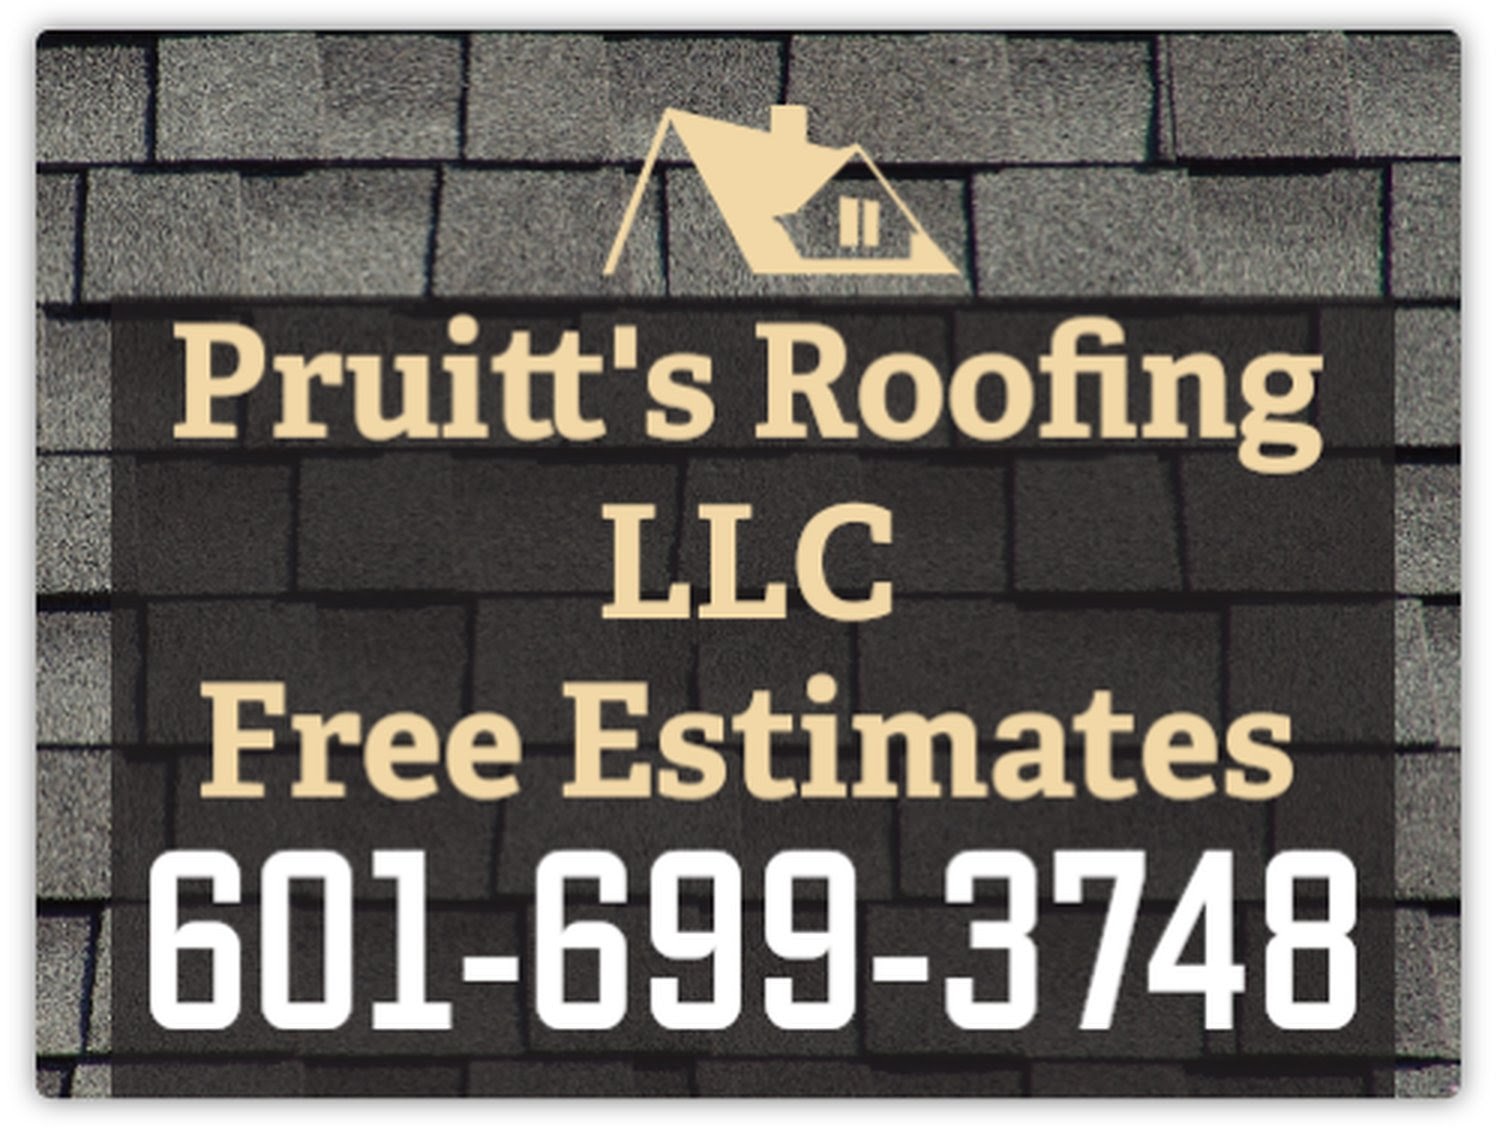 Pruitt's Roofing LLC